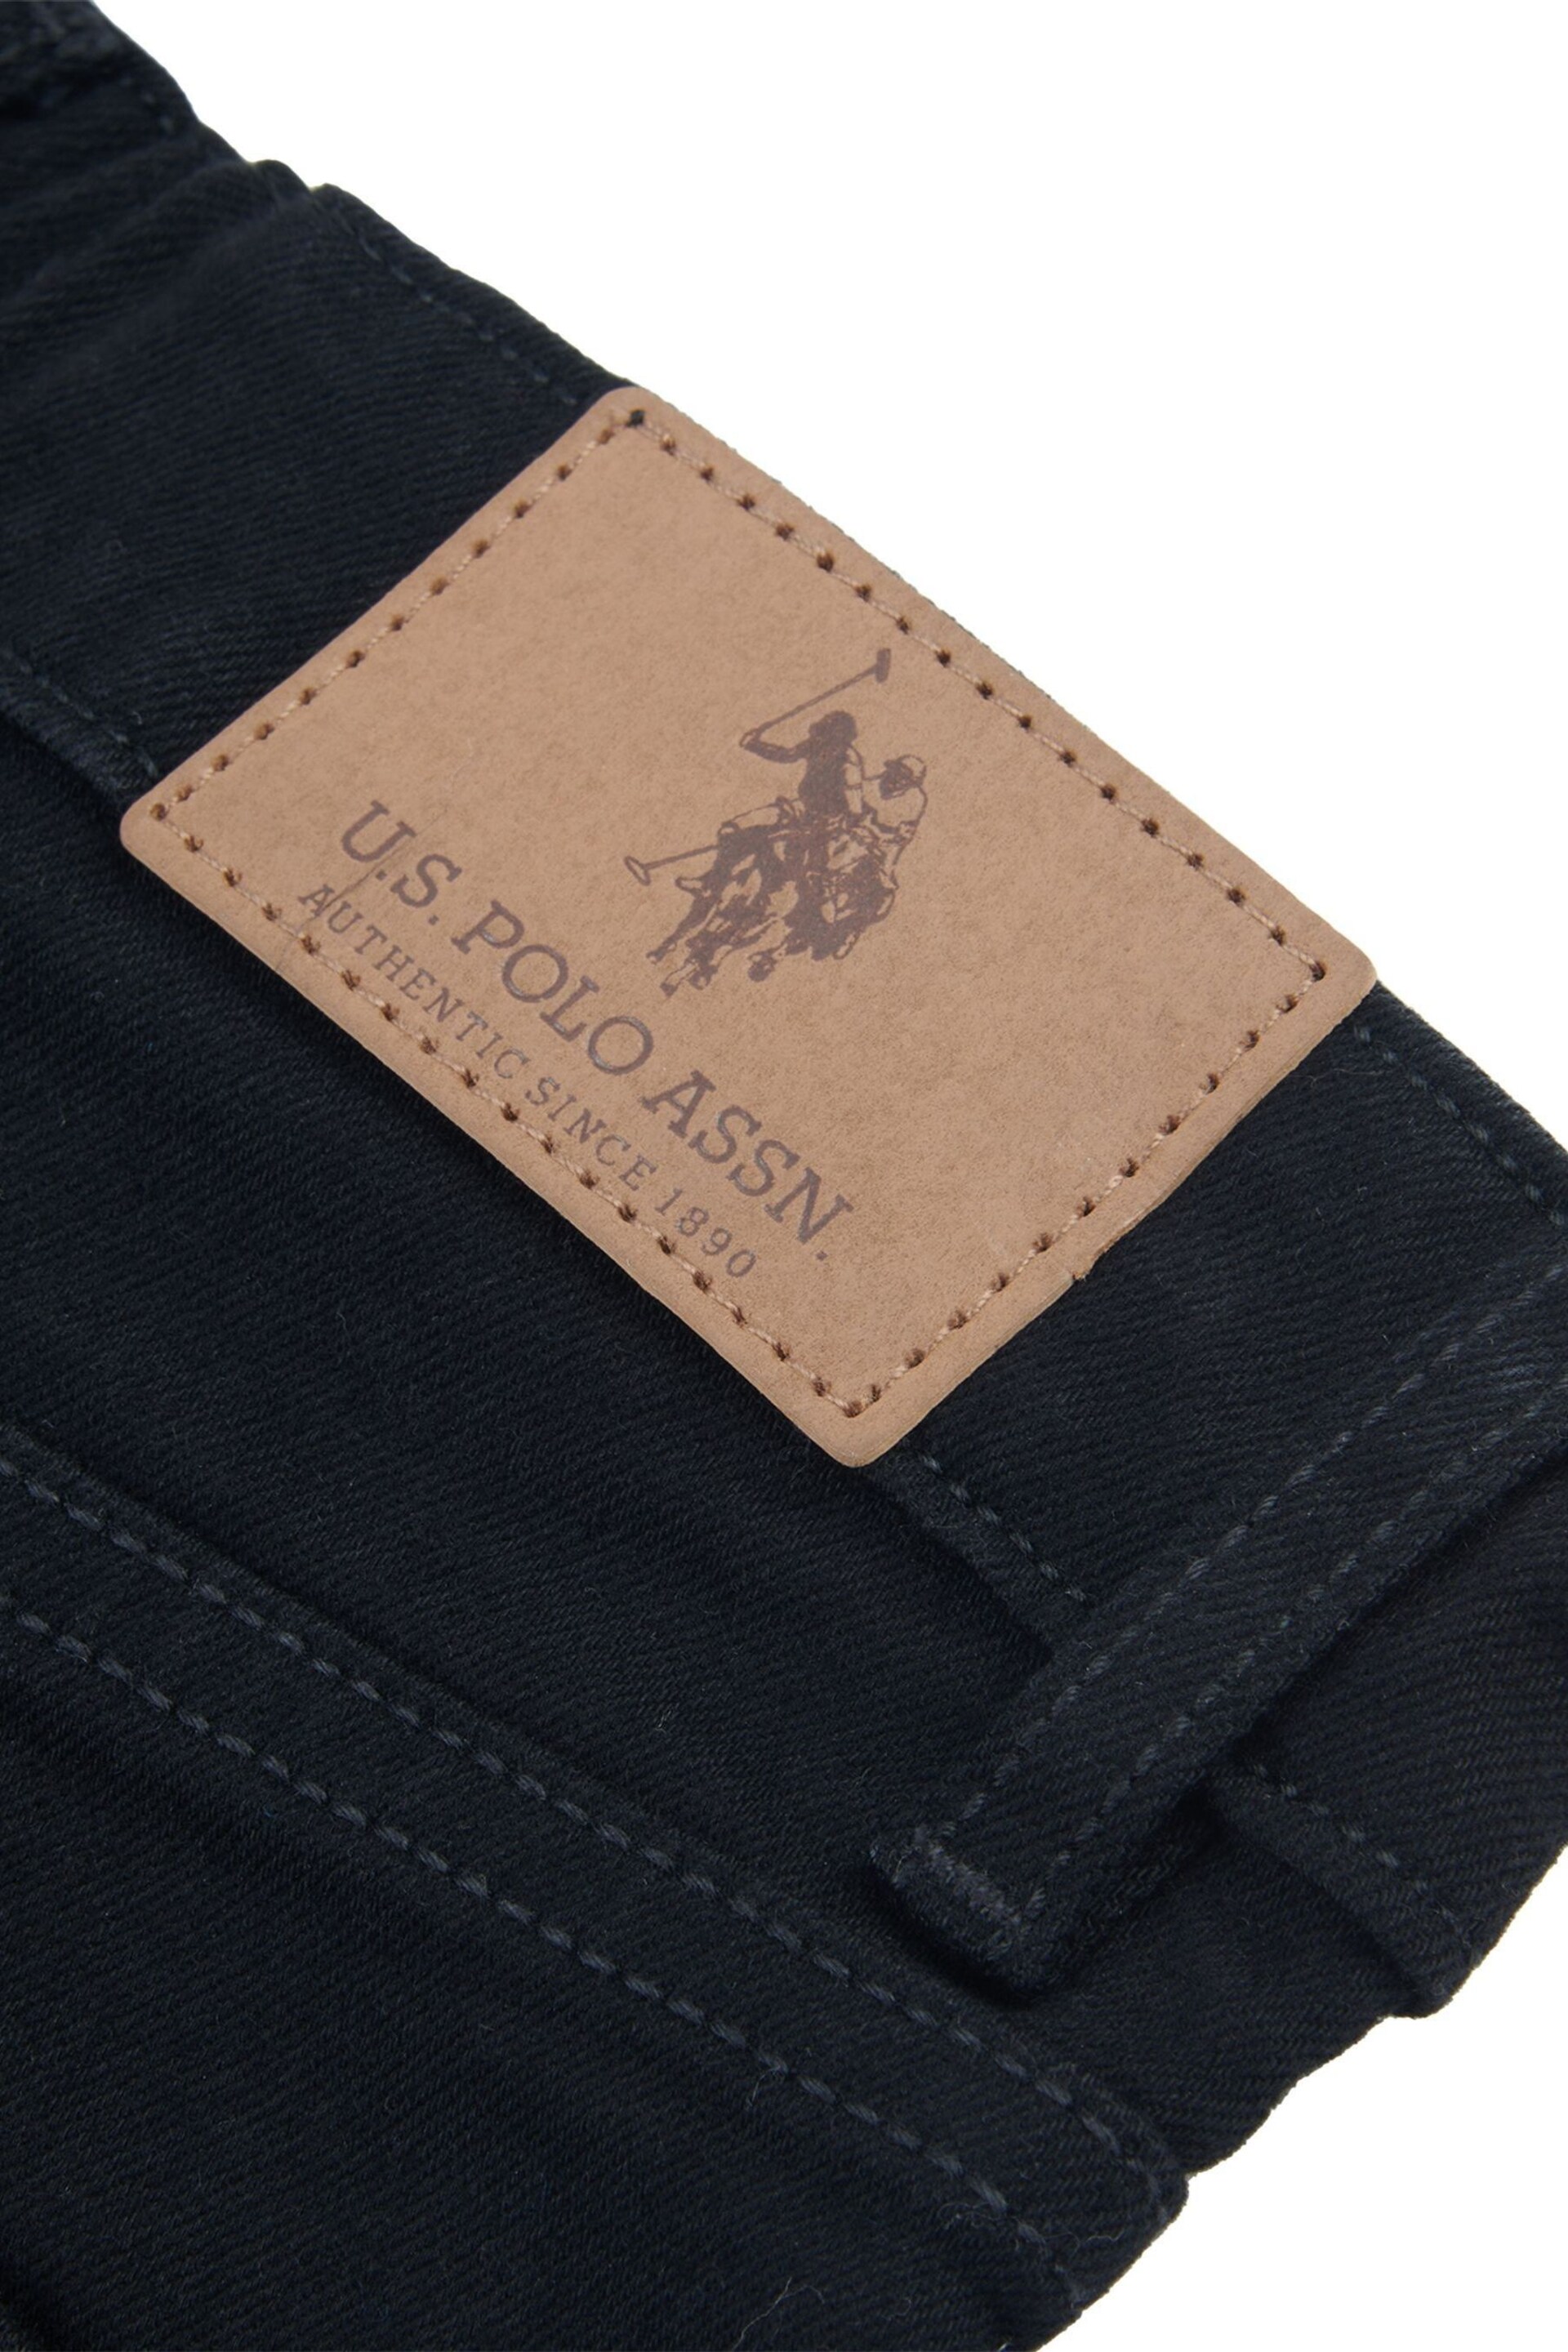 U.S. Polo Assn. Boys 5 Pocket Slim Fit Denim Black Jeans - Image 7 of 7